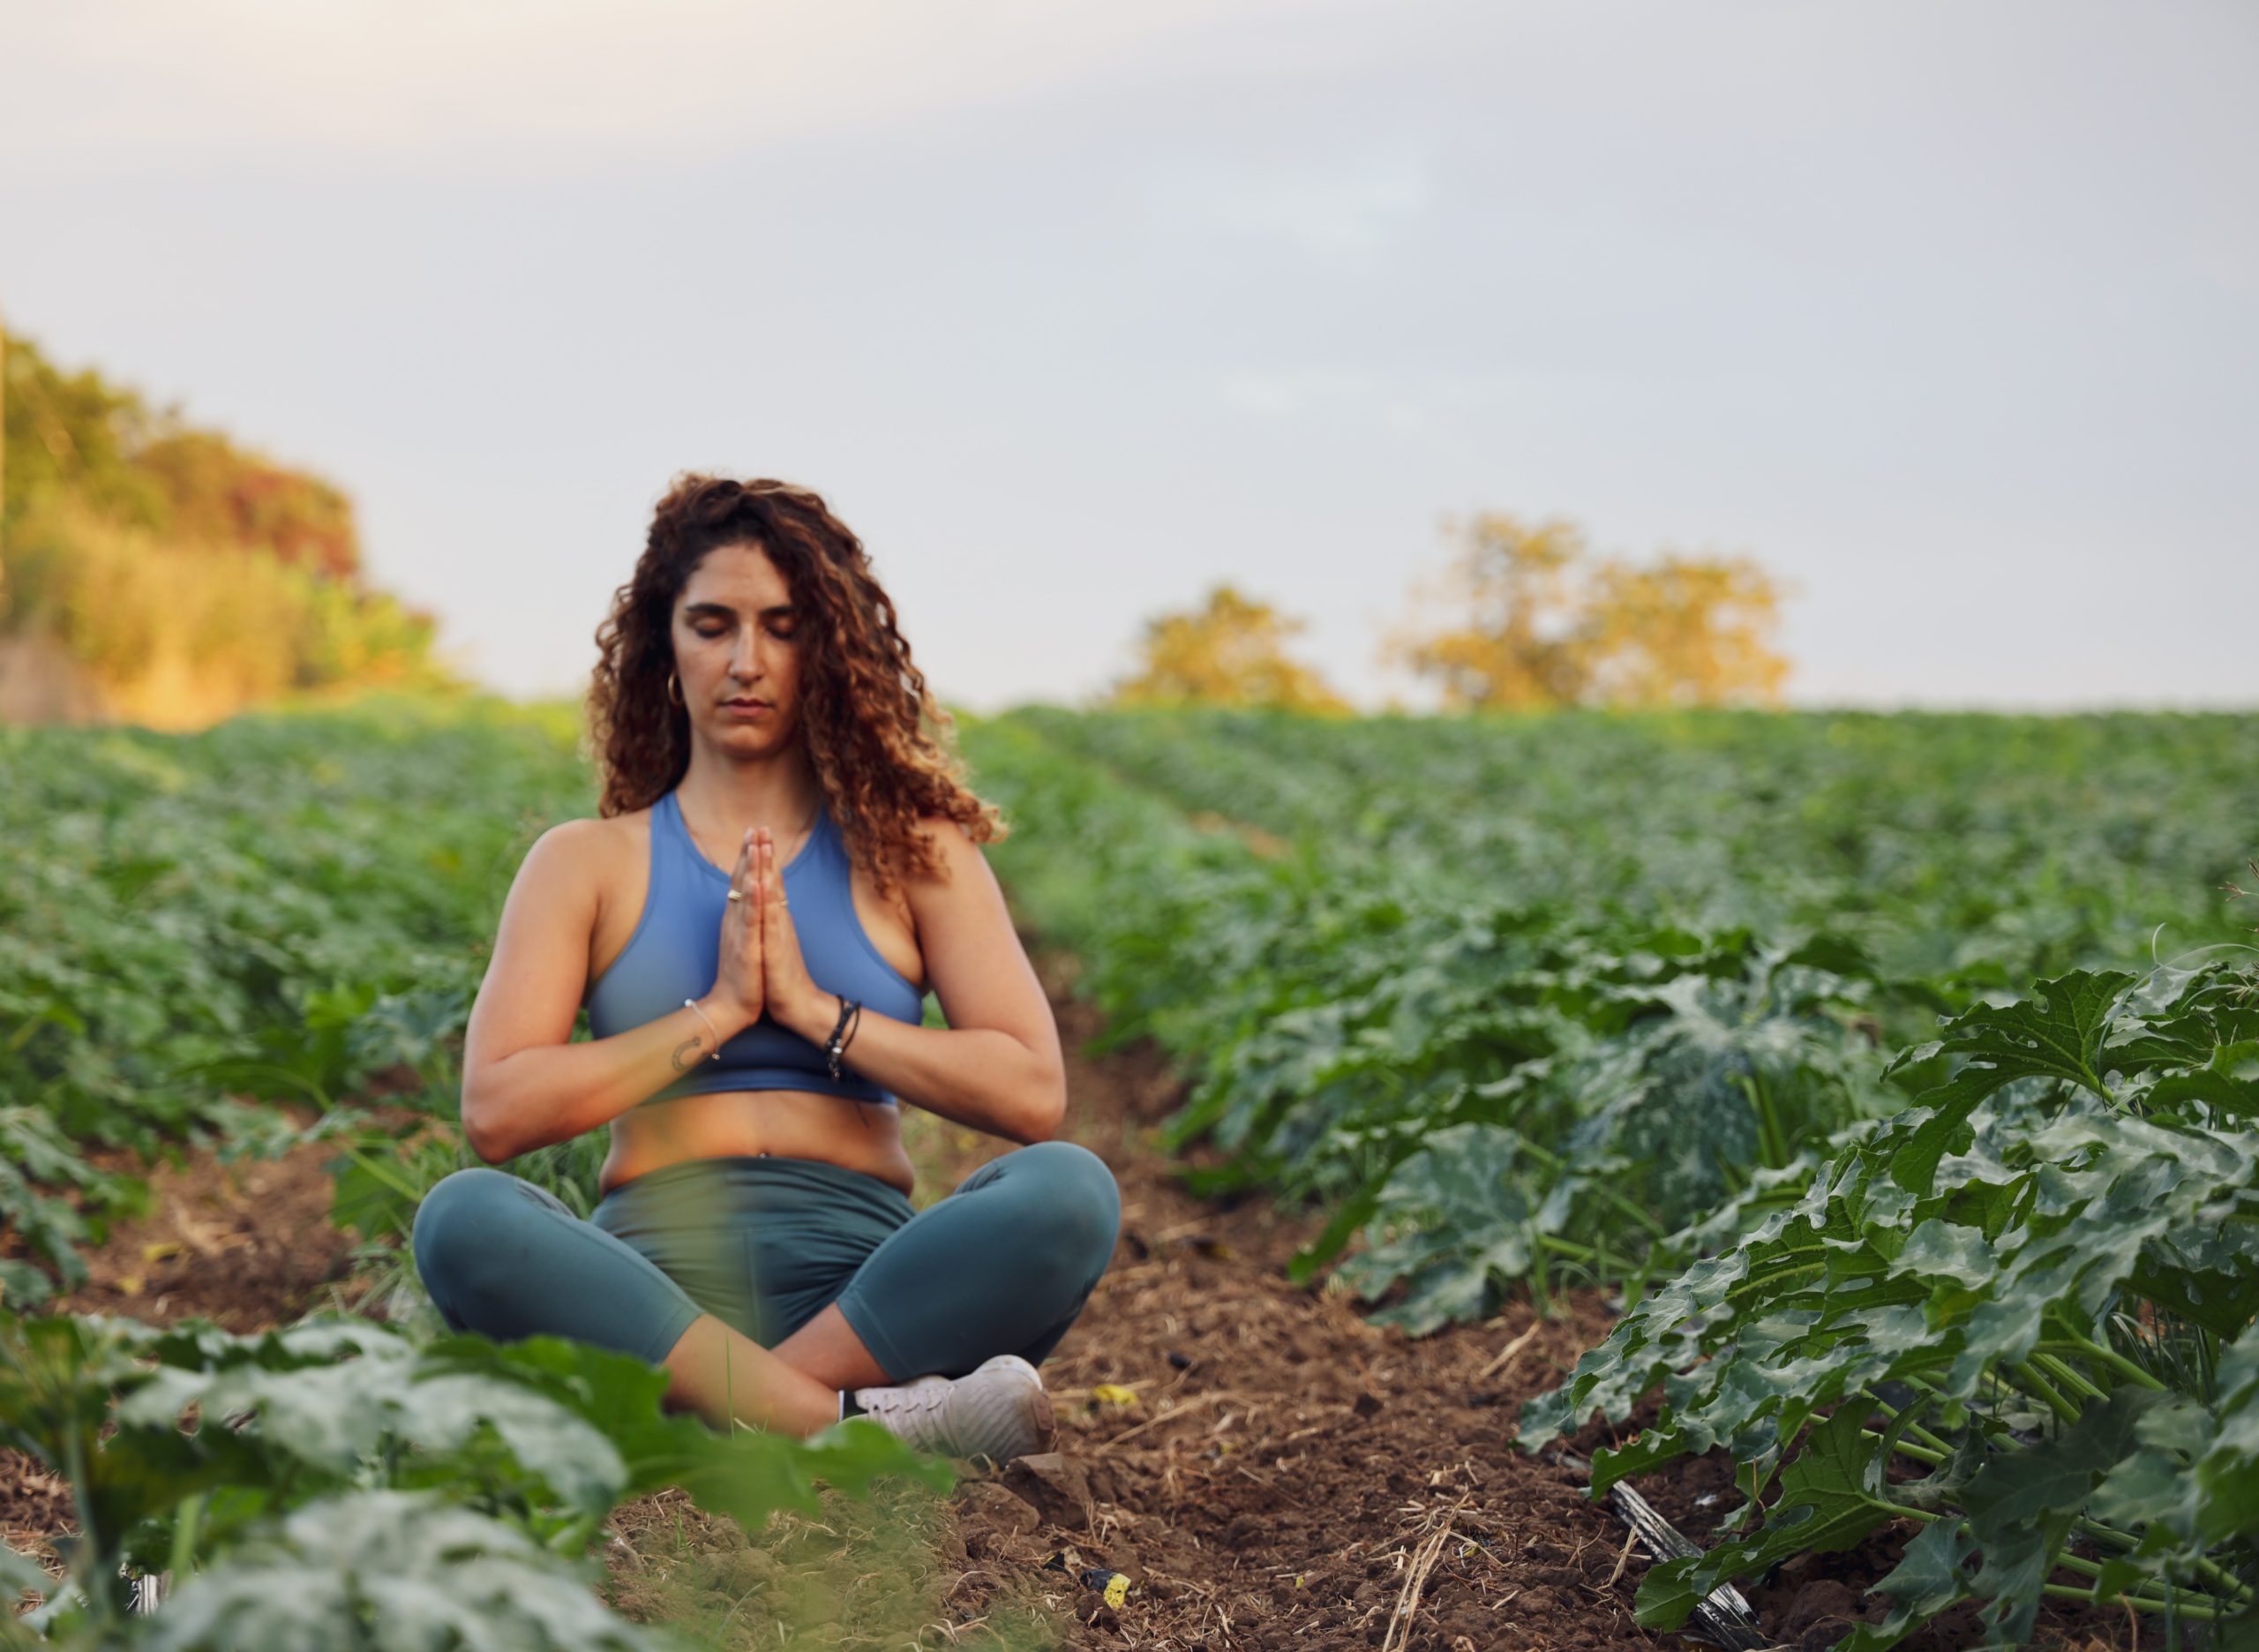 A woman sitting in a field meditating.